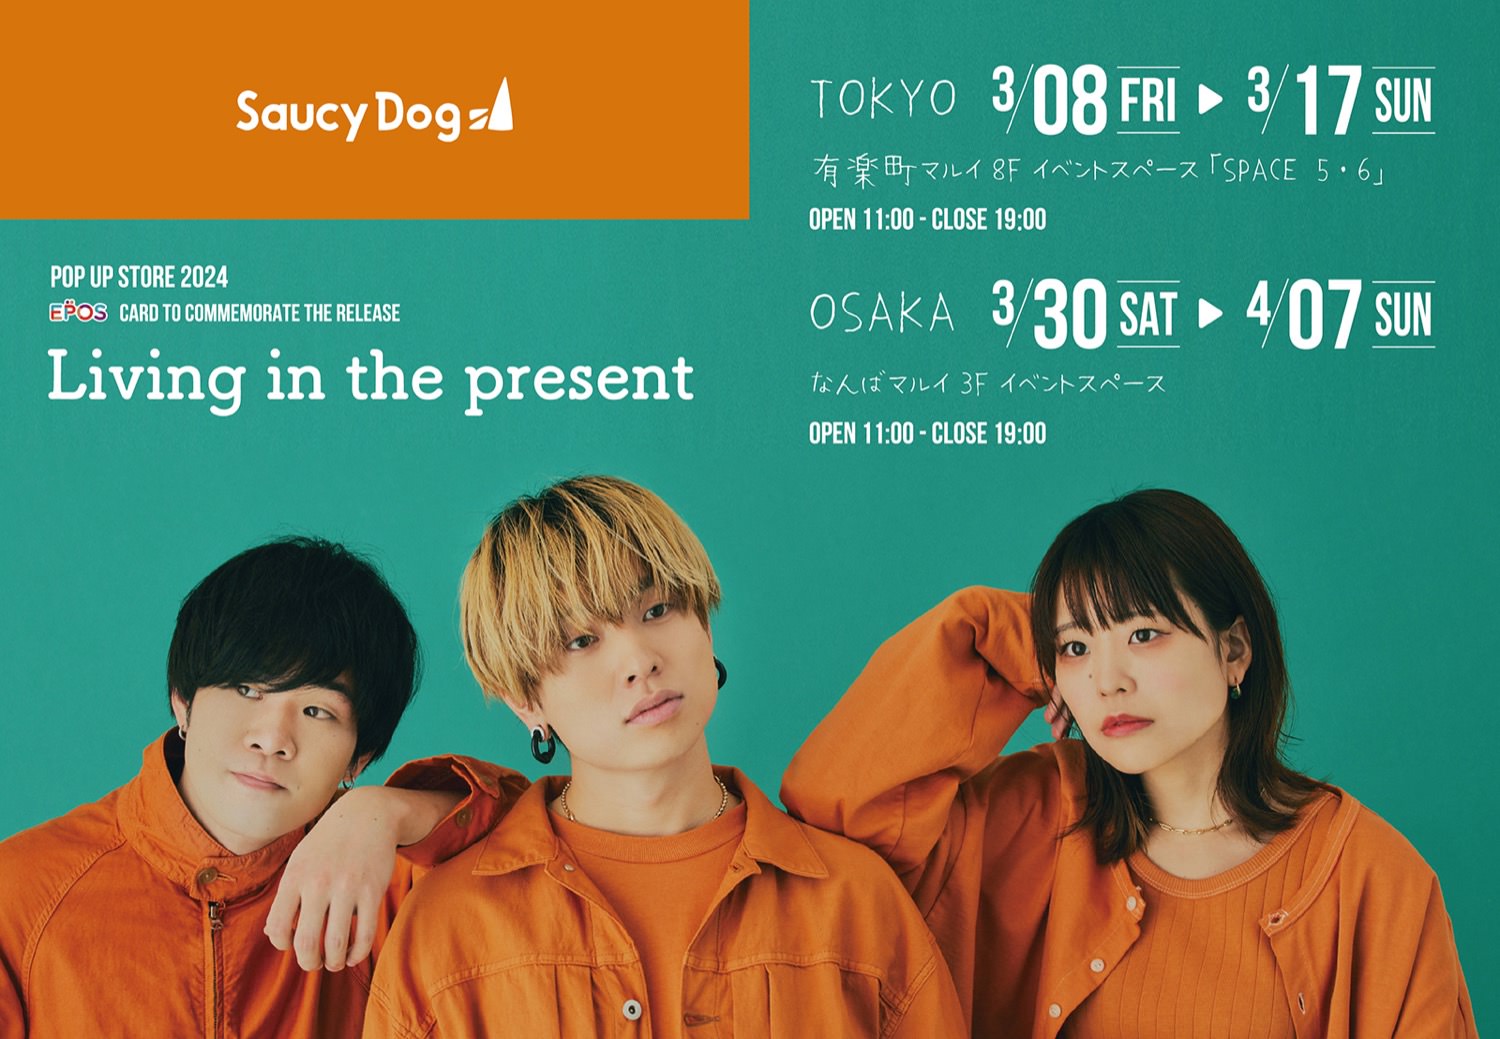 Saucy Dog ポップアップストア in 東京・大阪 3月8日より開催!